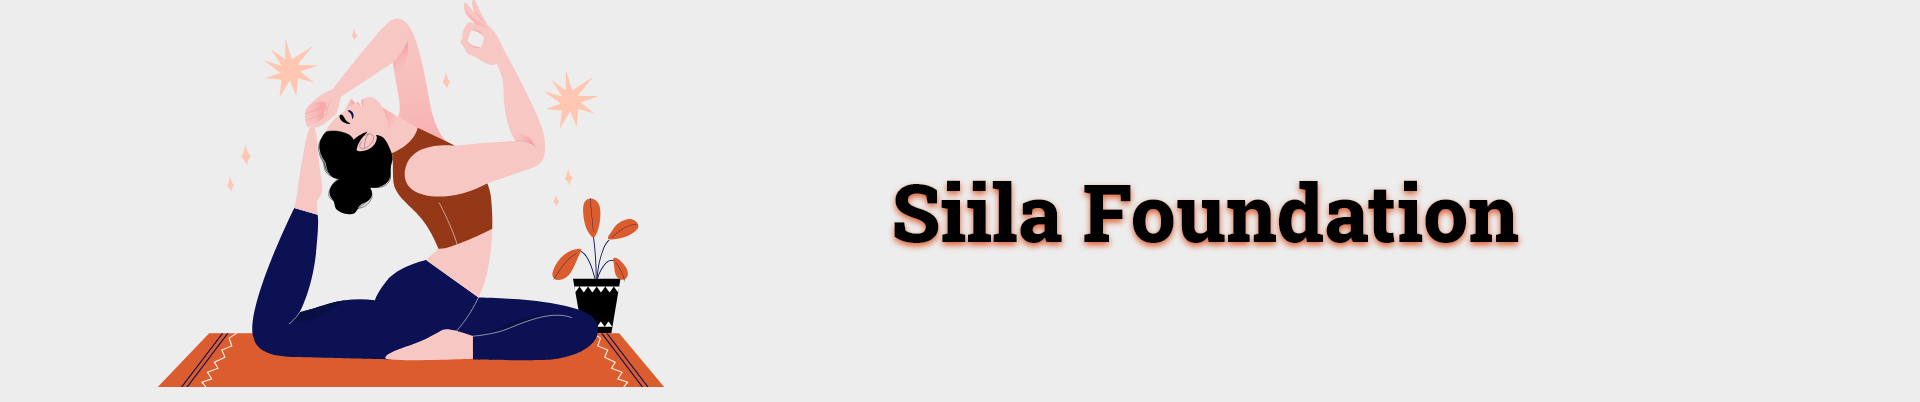 Siila Foundation Banner